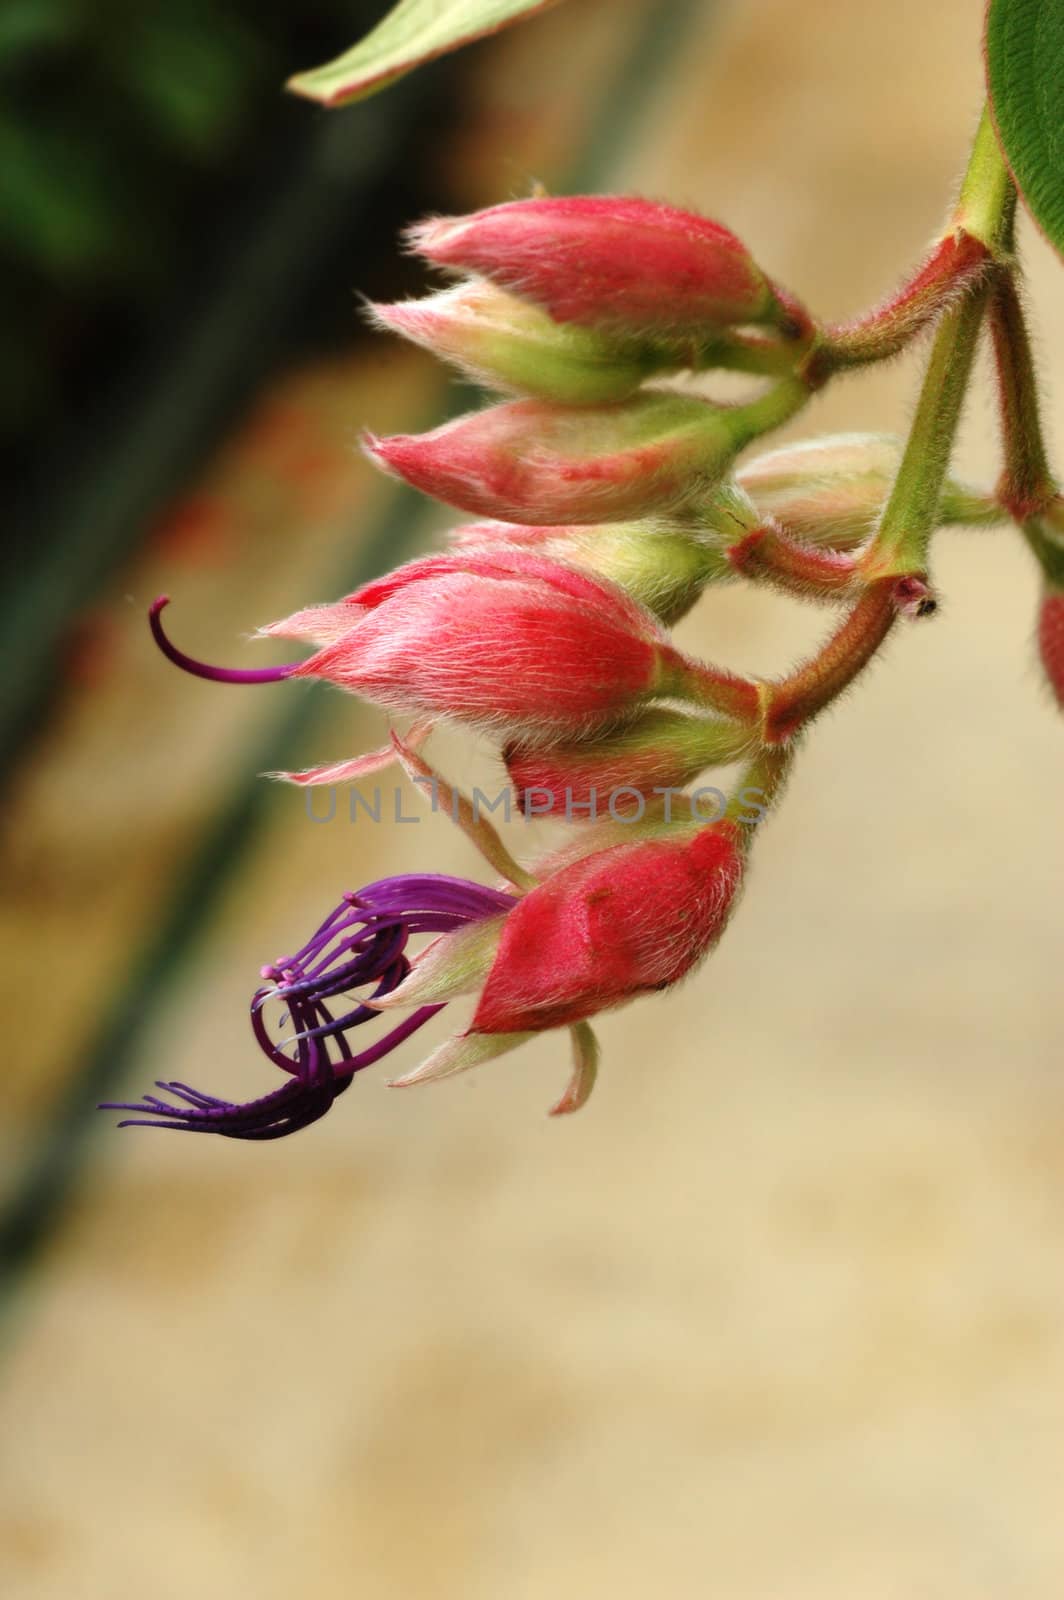 Flower Buds by khwi